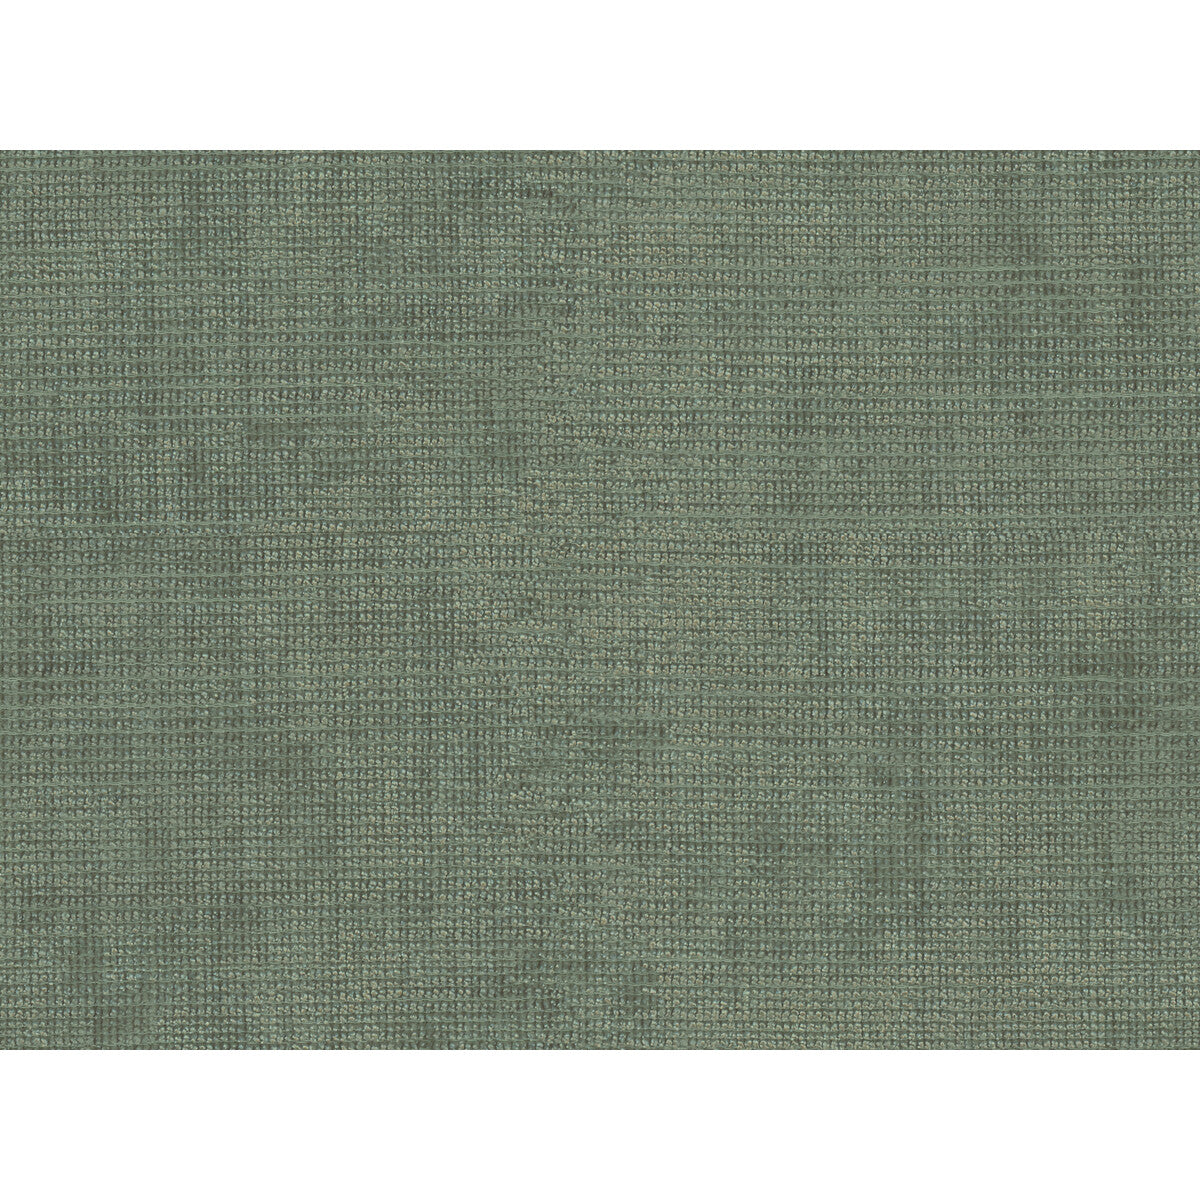 Kravet Smart fabric in 34191-113 color - pattern 34191.113.0 - by Kravet Smart